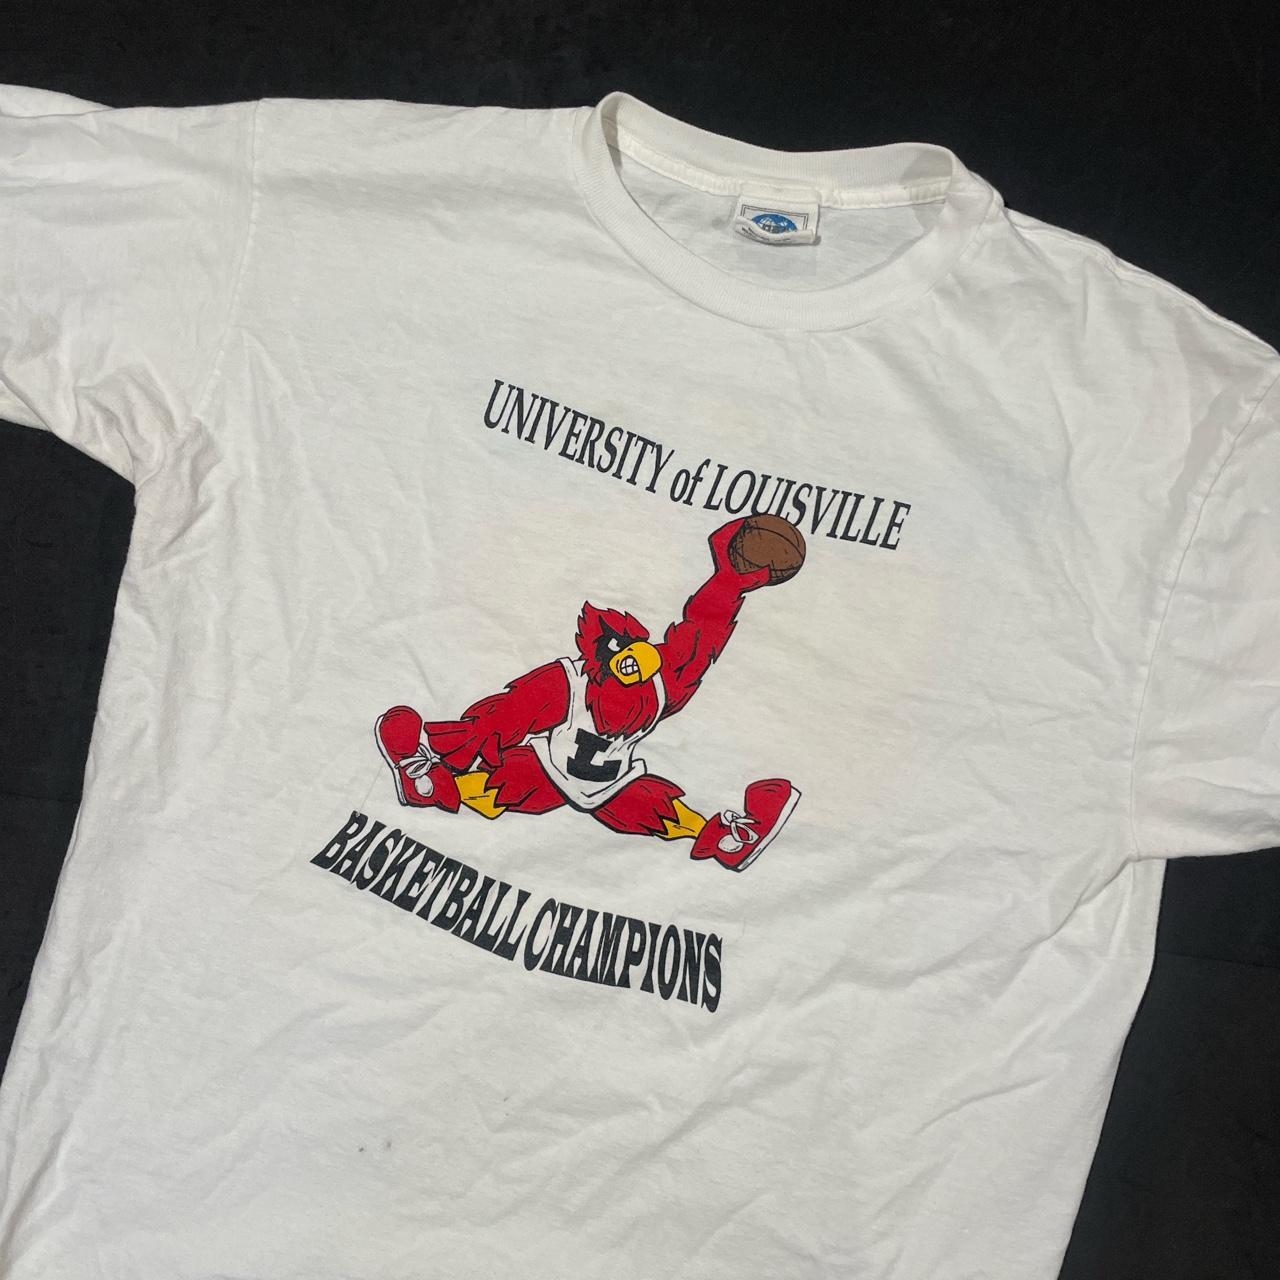 Louisville Cardinals Sweatshirt 90s University Sweater Graphic